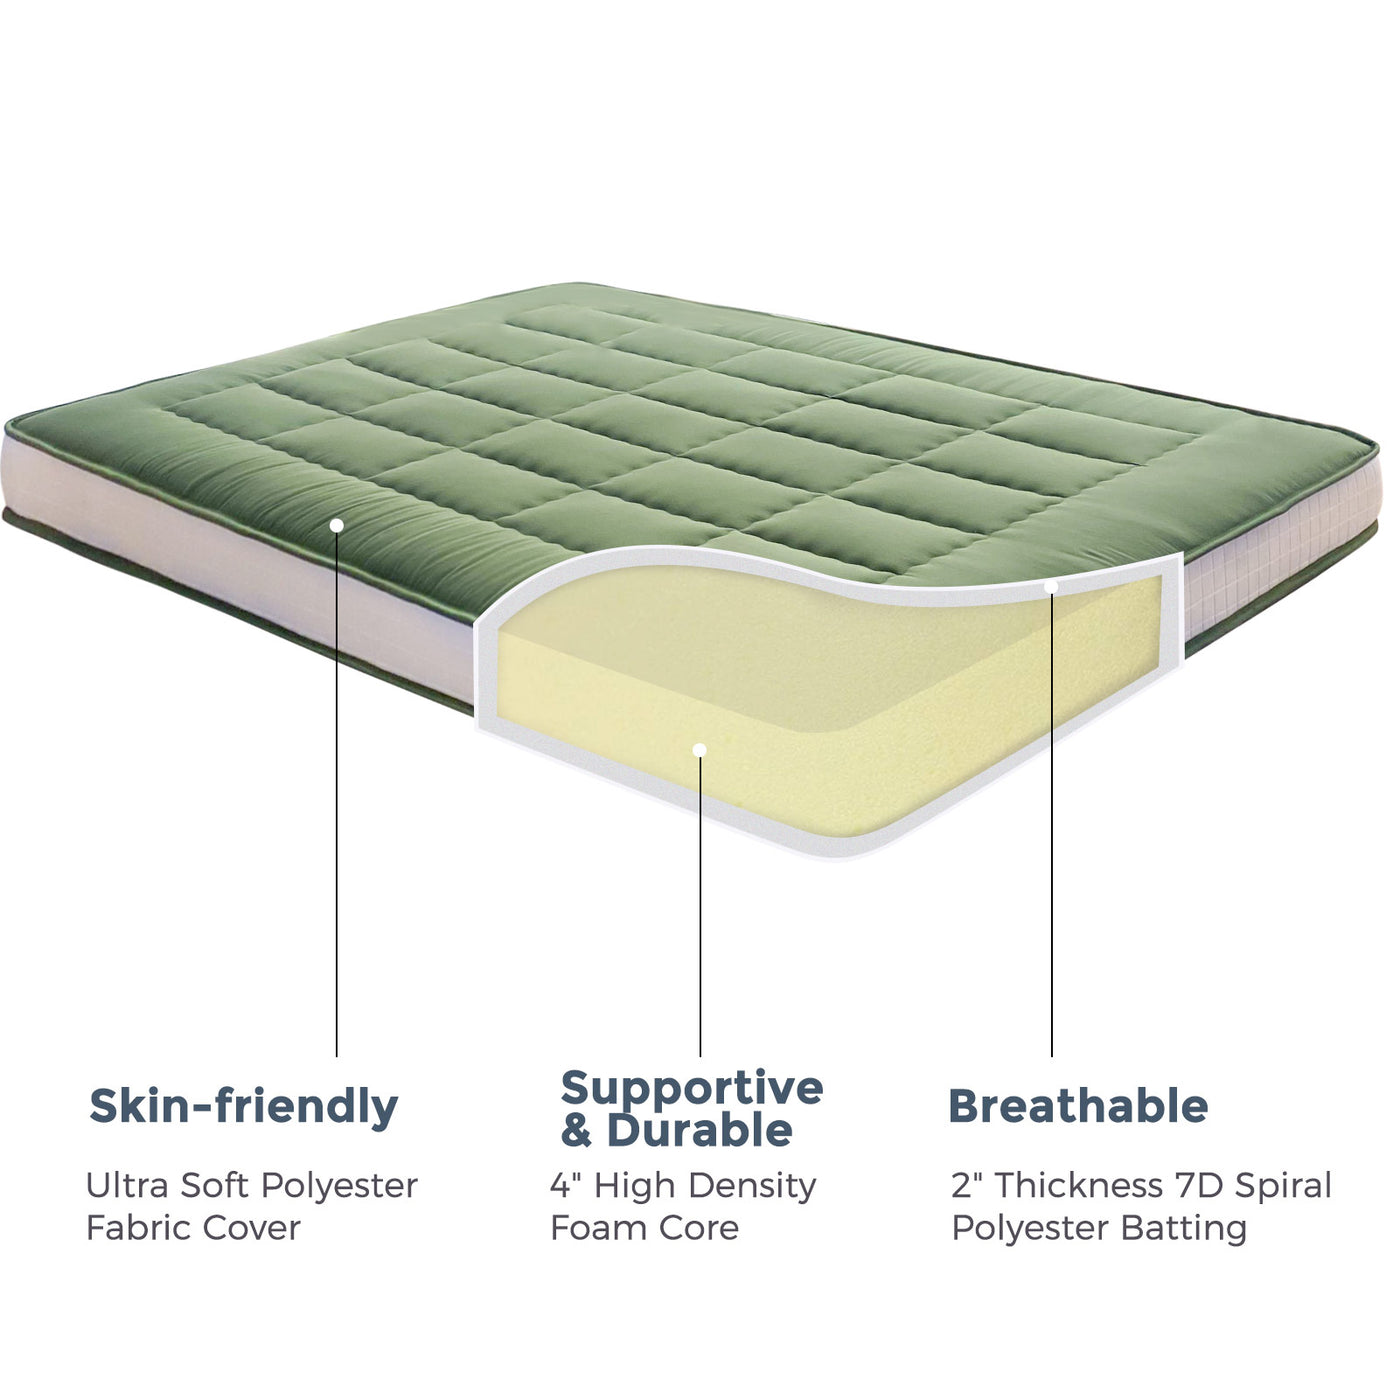 futon mattress#thickness_6inch5